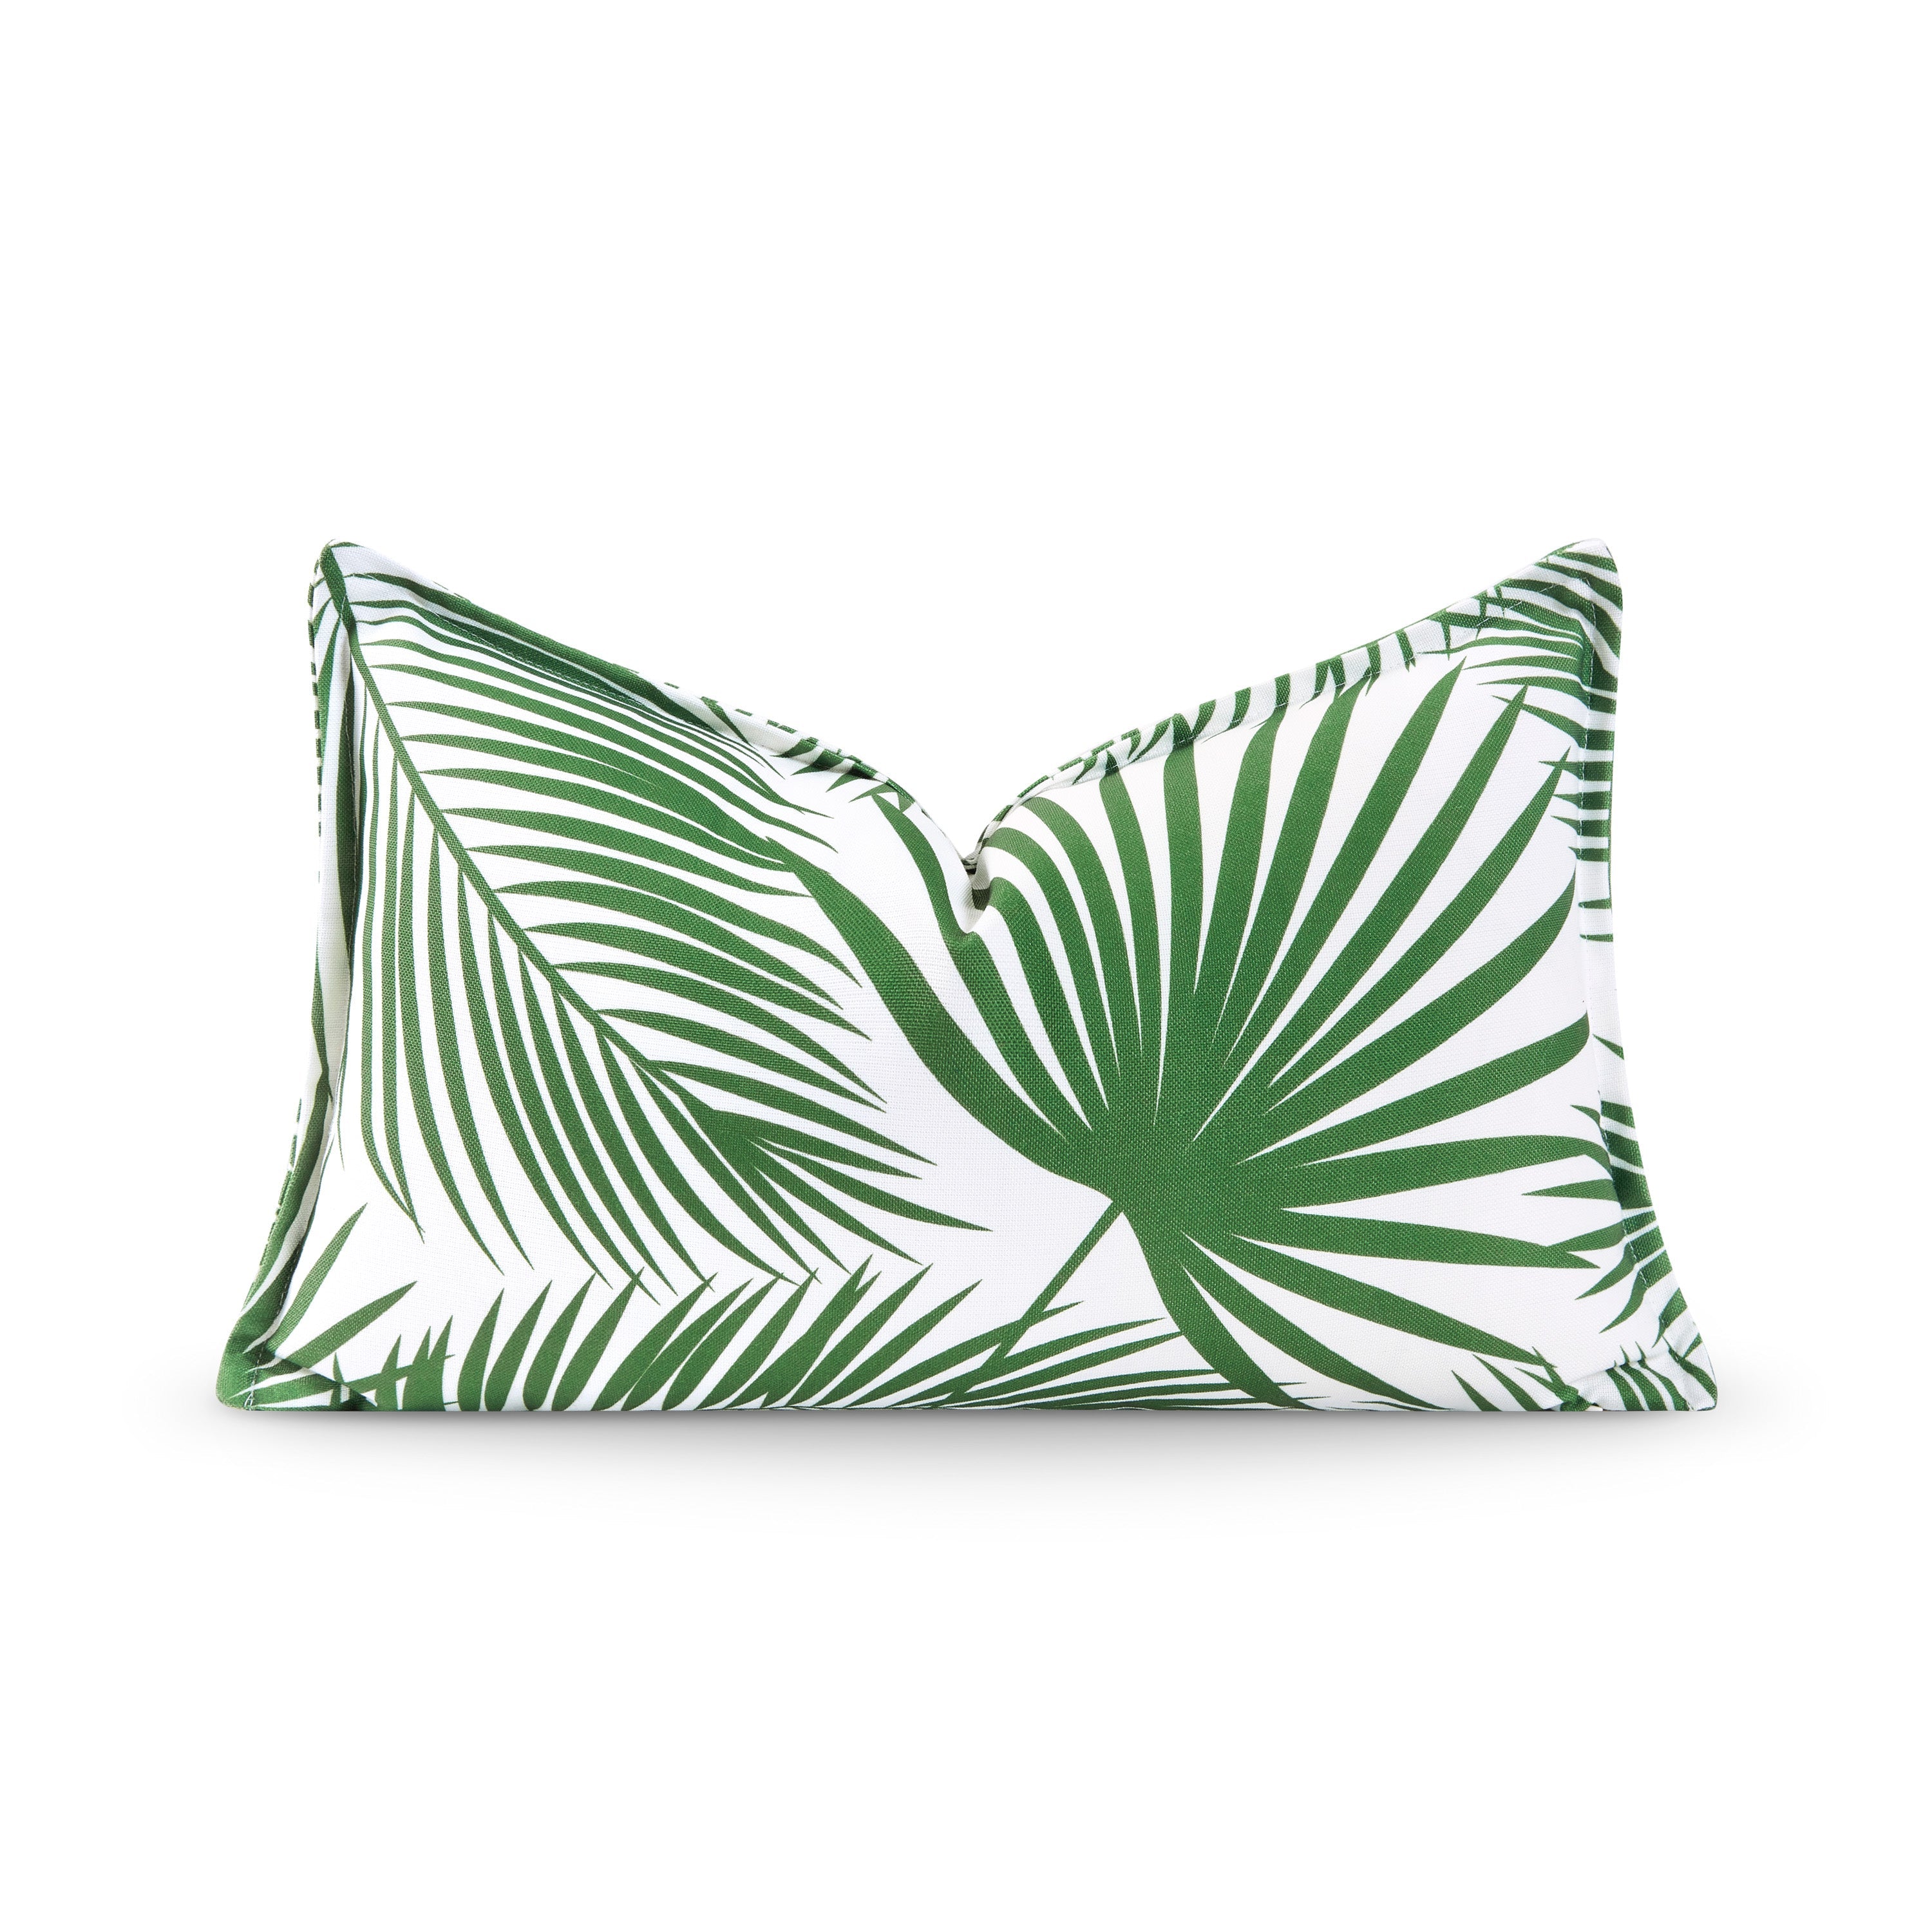 Coastal Indoor Outdoor Lumbar Pillow Cover, Palm Leaf, Green, 12"x20"